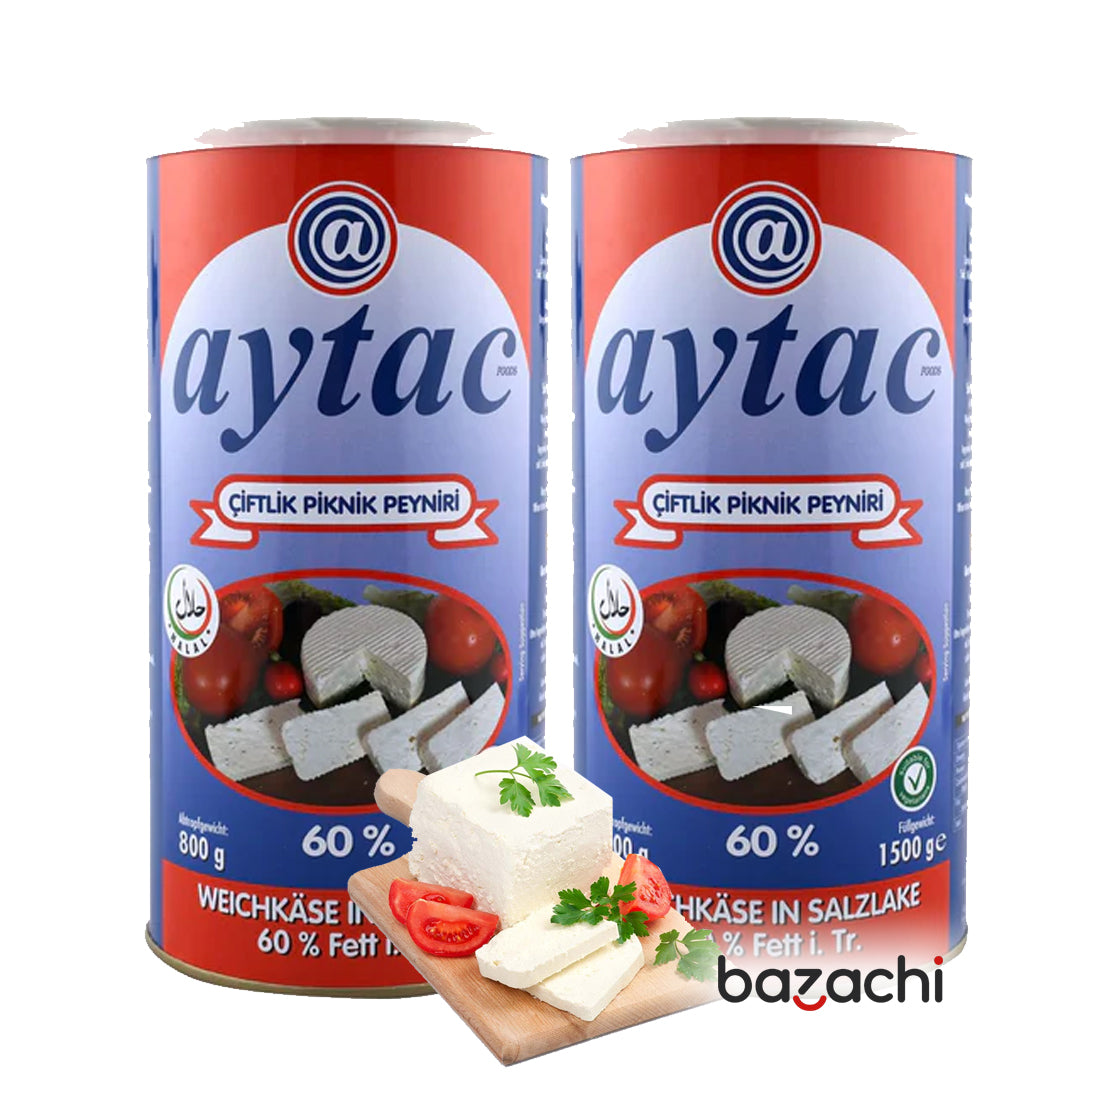 Aytac Feta Cheese %60 fat 1500g